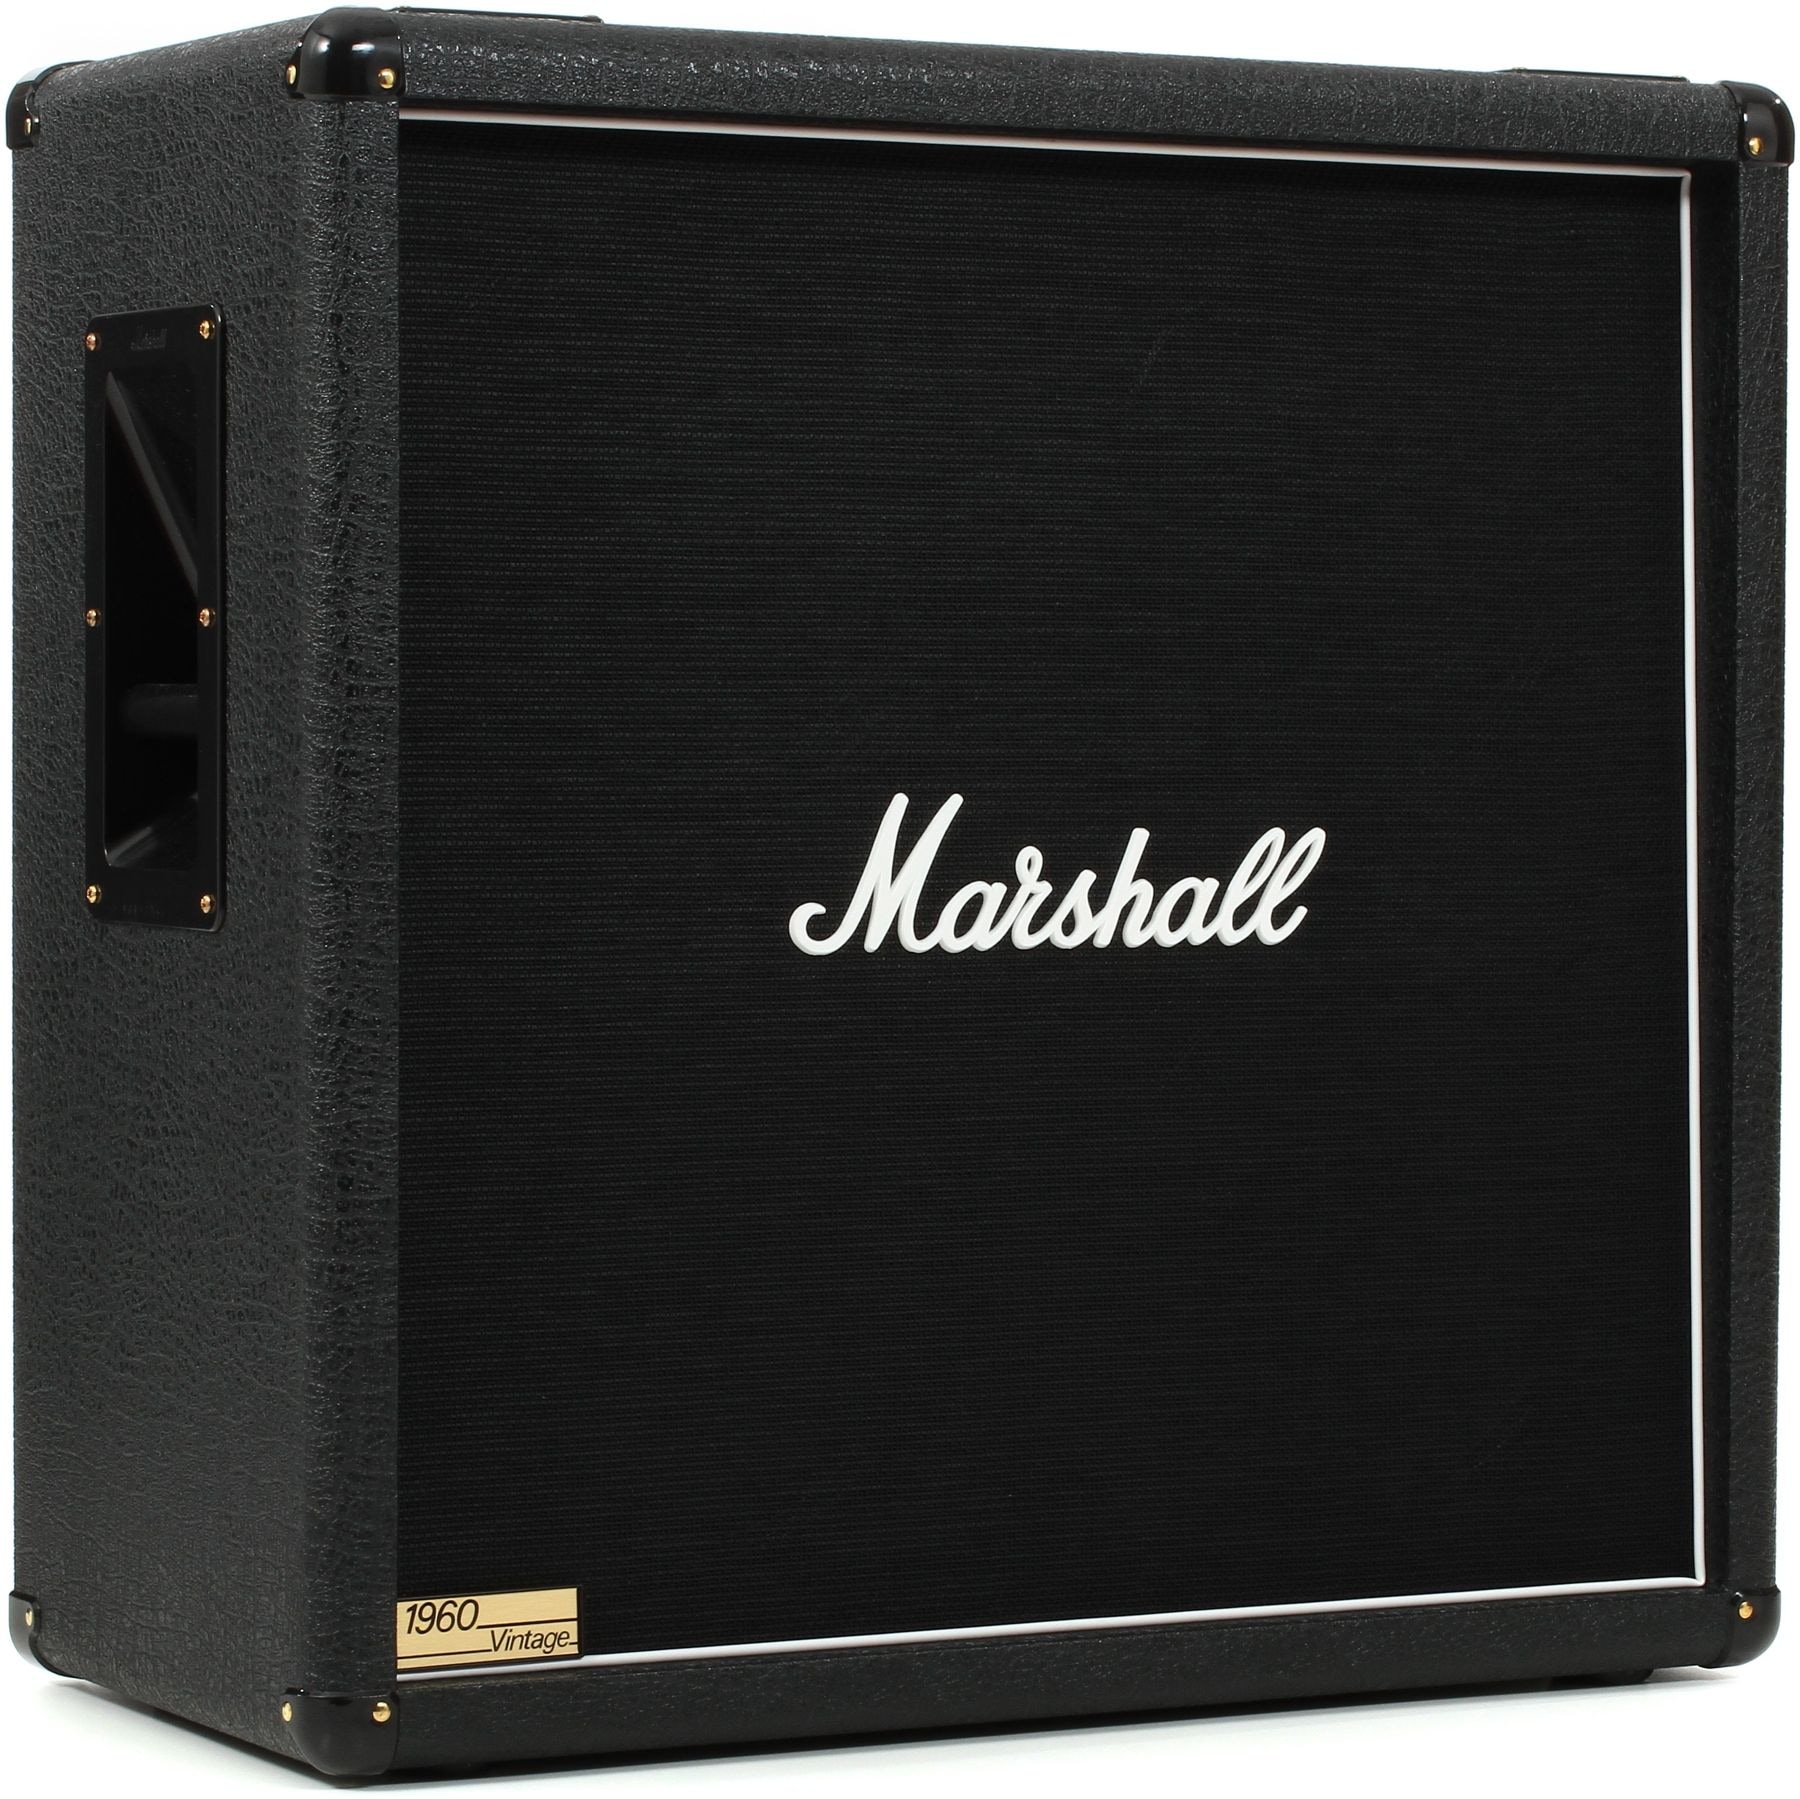 MARSHALL 1960BV 280W 4X12 MONO/STEREO BASE CABINET кабинет гитарный